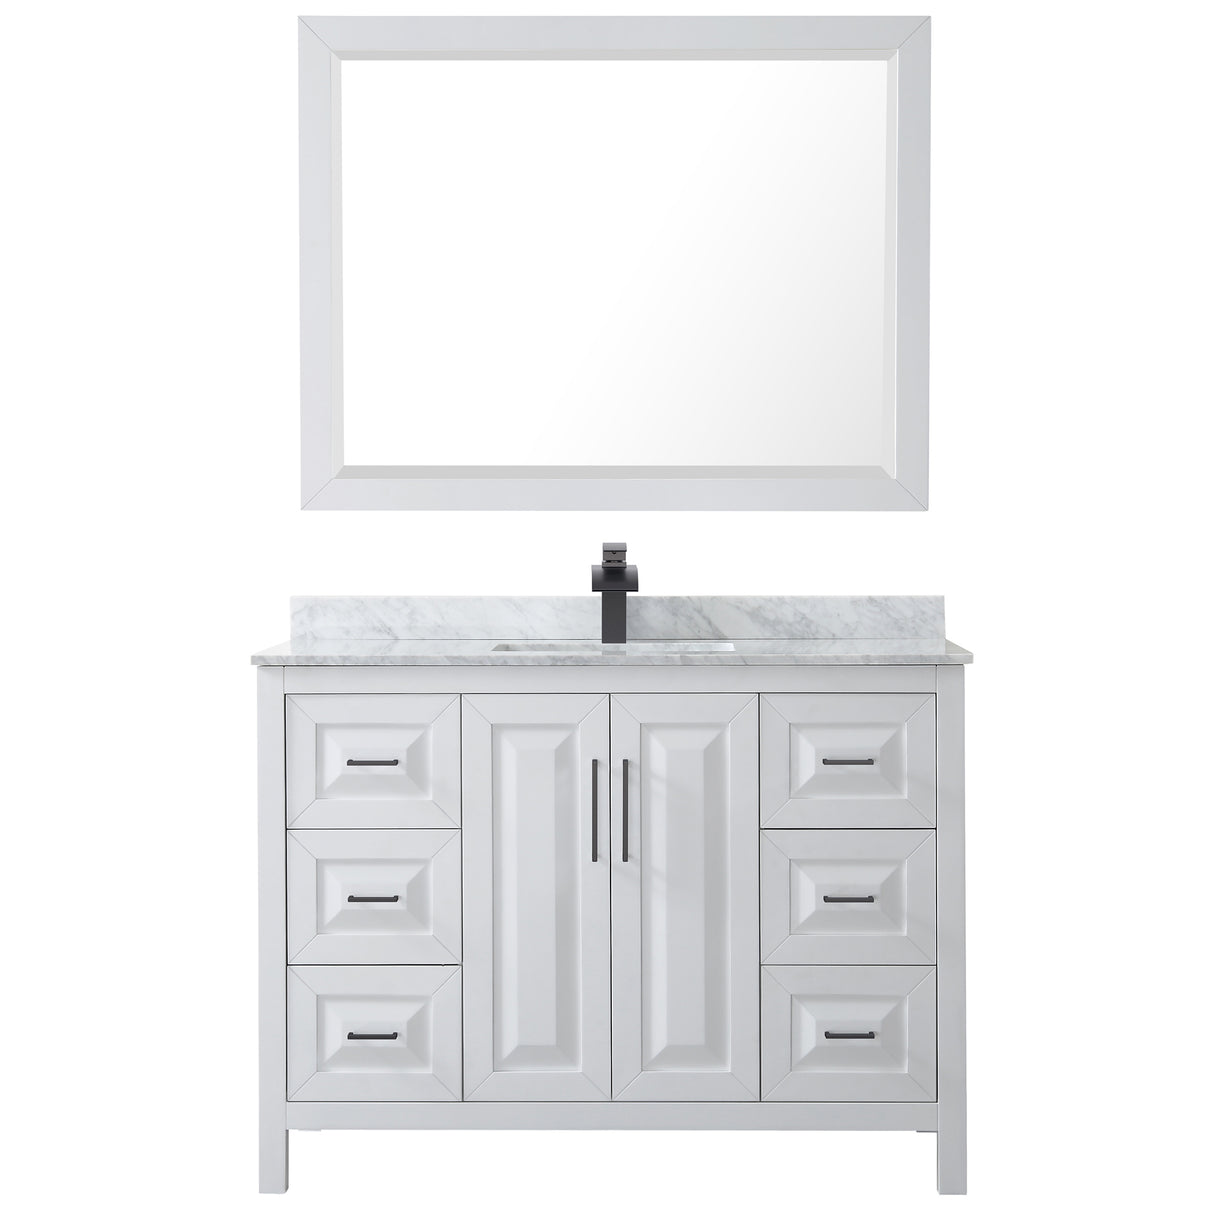 Daria 48 Inch Single Bathroom Vanity in White White Carrara Marble Countertop Undermount Square Sink Matte Black Trim 46 Inch Mirror